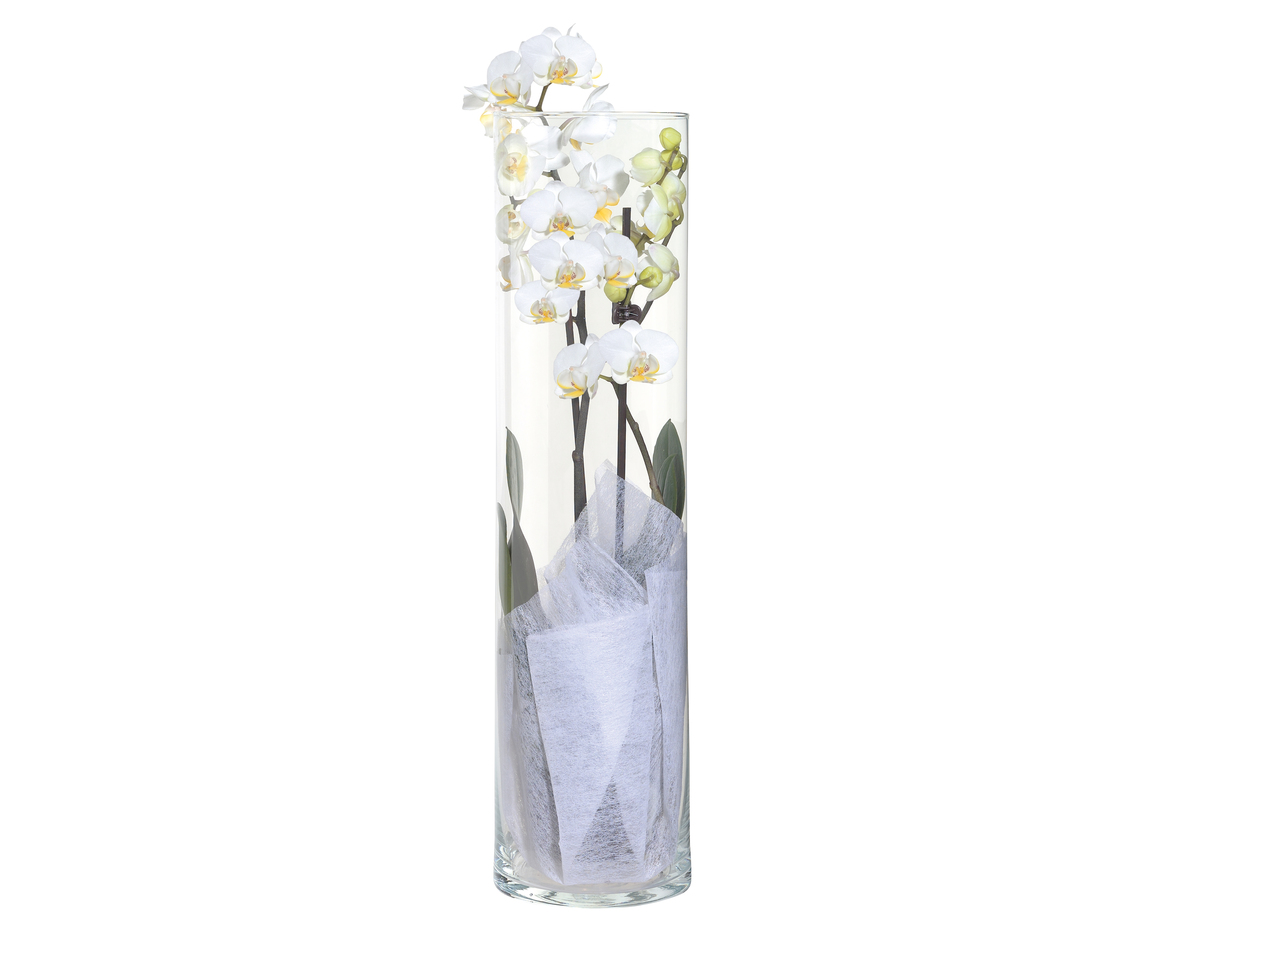 Phalaenopsis dans un vase en verre